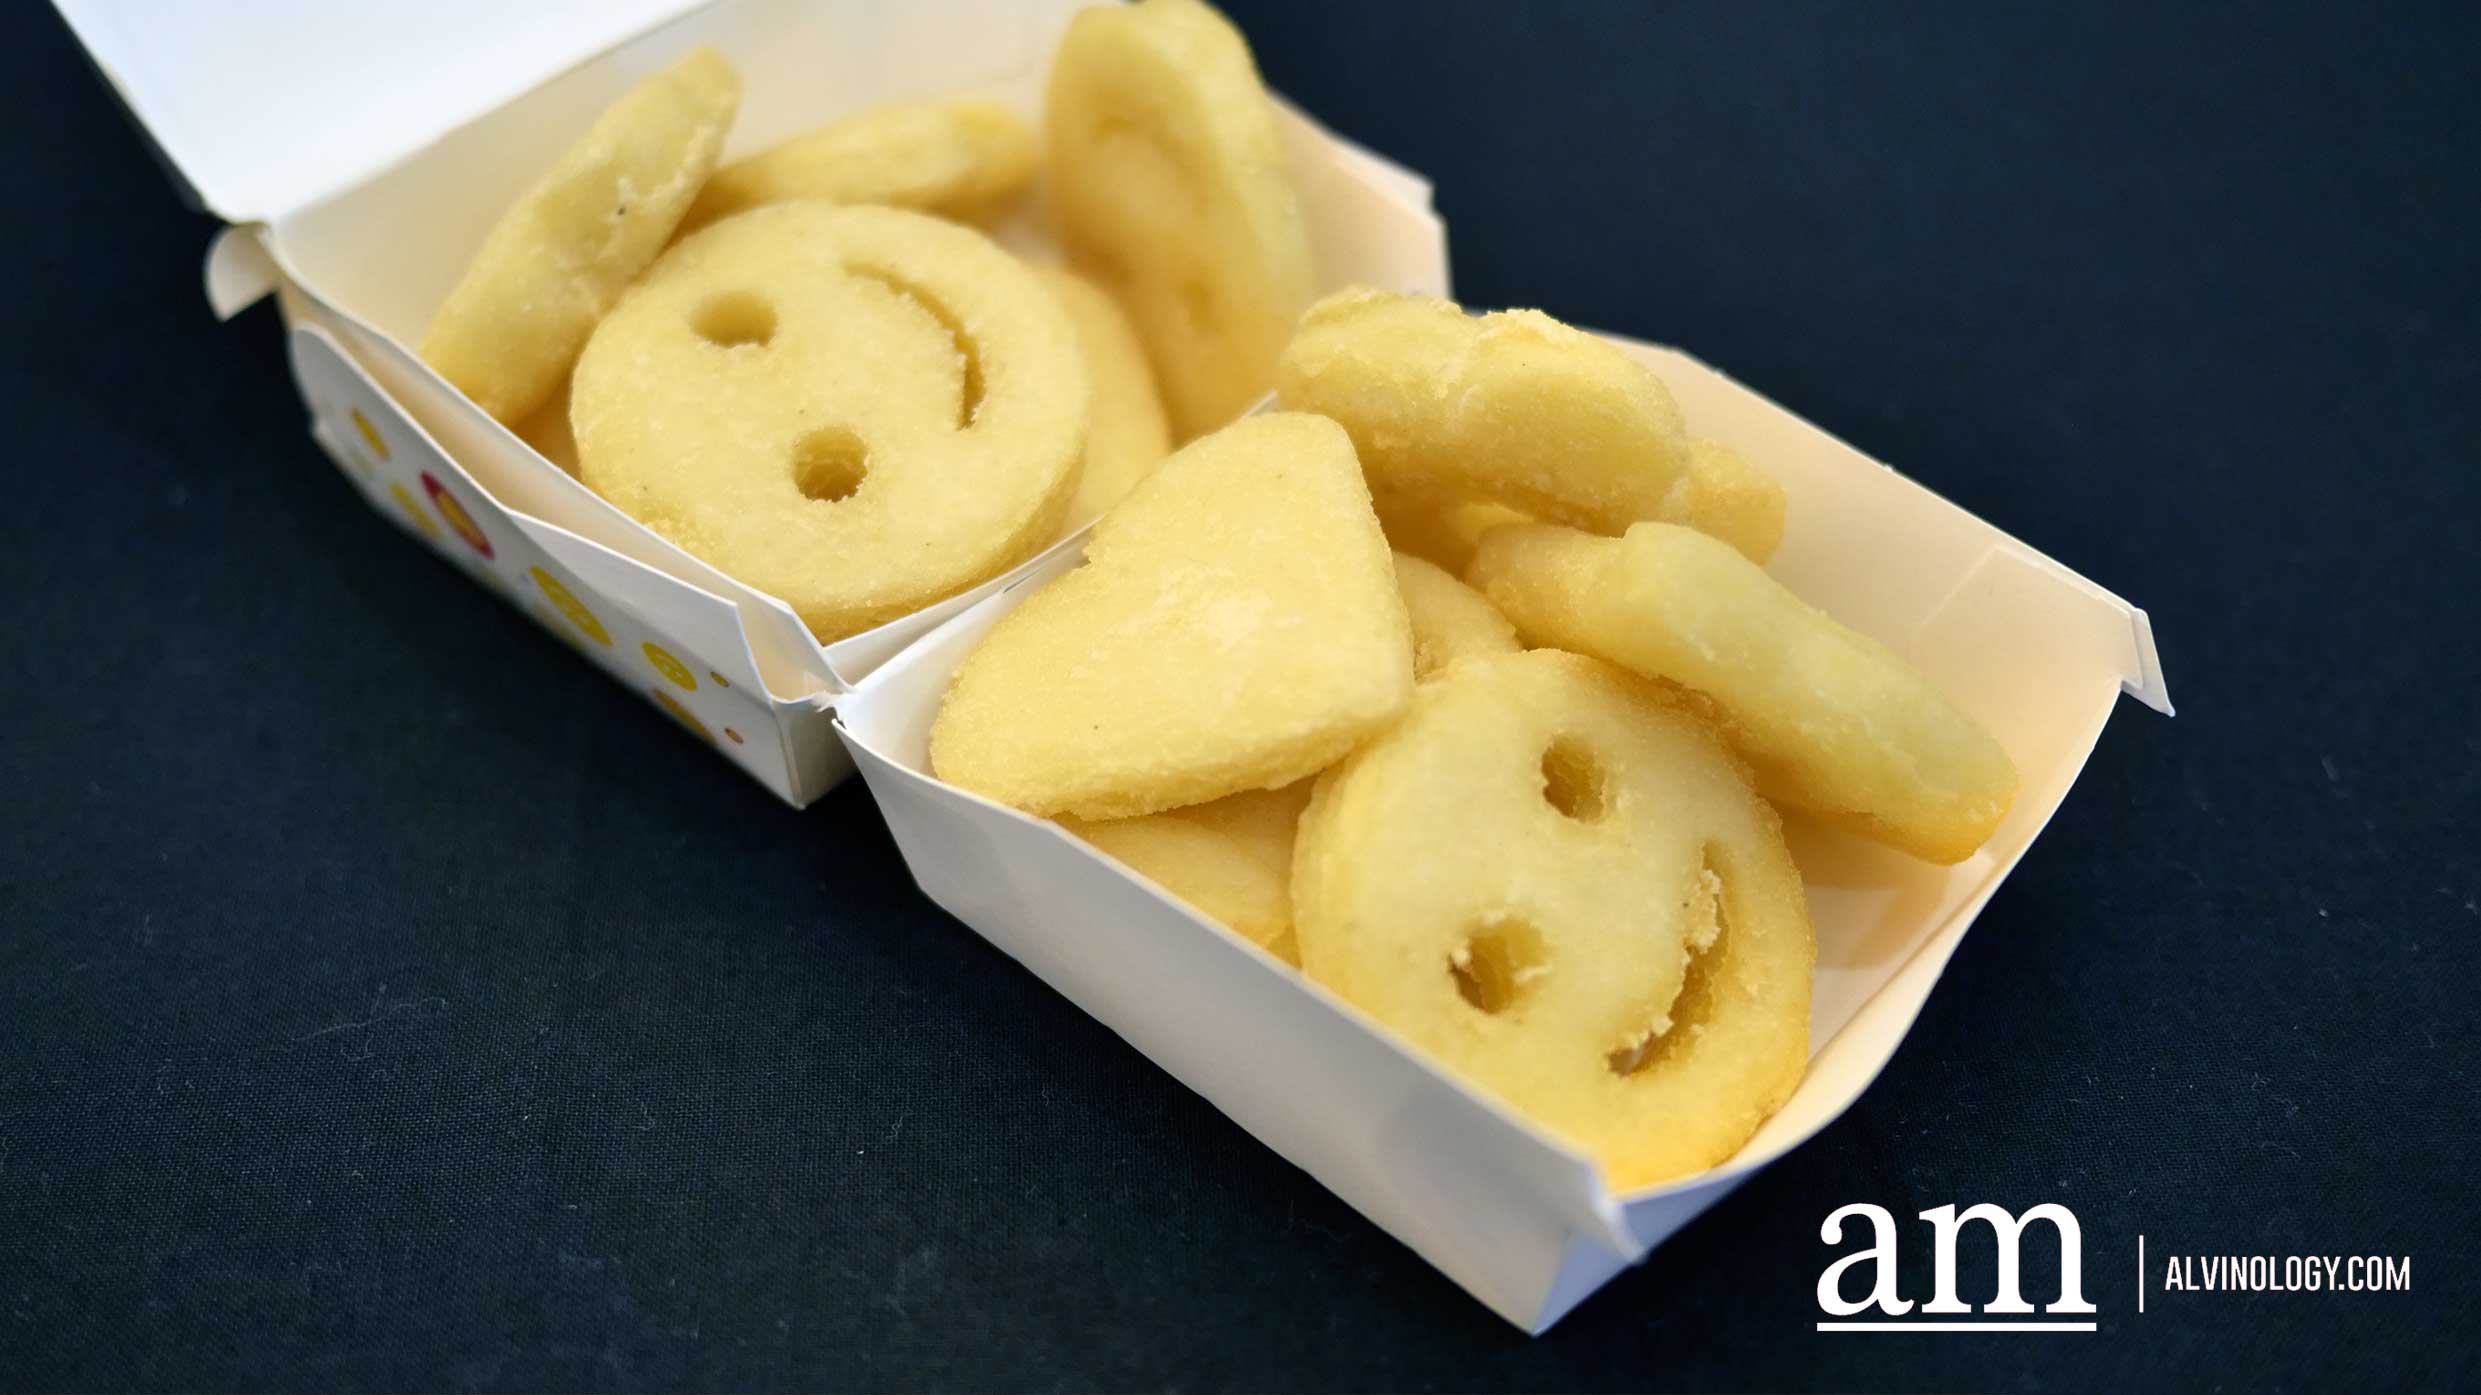 McDonald's Singapore introduces Emoji Potato, Grilled Chicken Sandwich, Crispy Fish Sandwich and brings back Scrambled Egg Burger - Alvinology